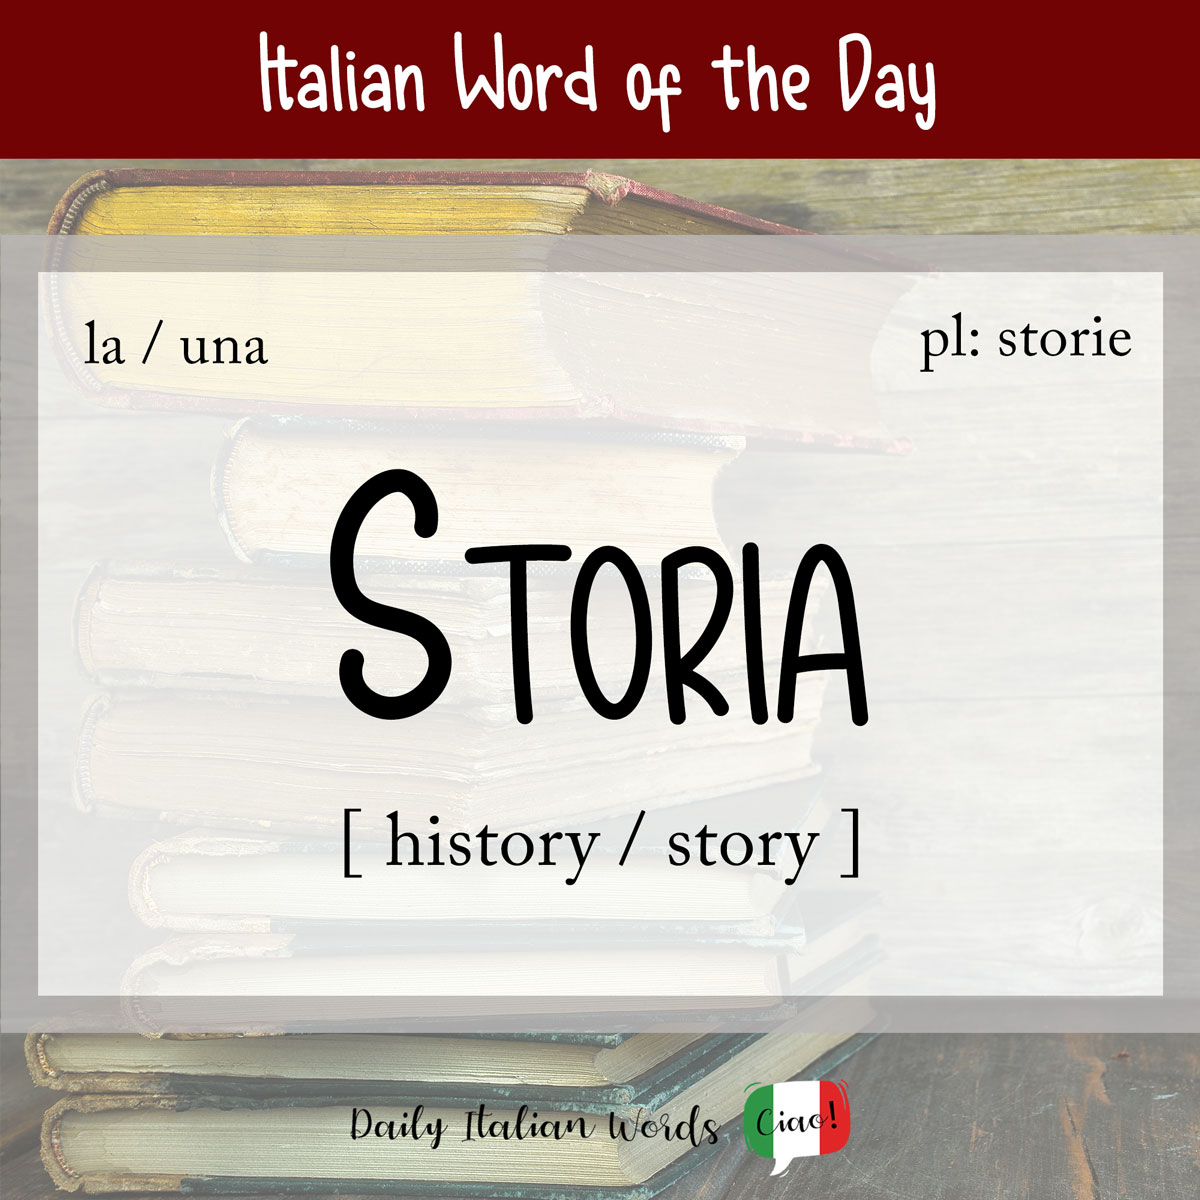 Italian word of the day: Storia (history/story)